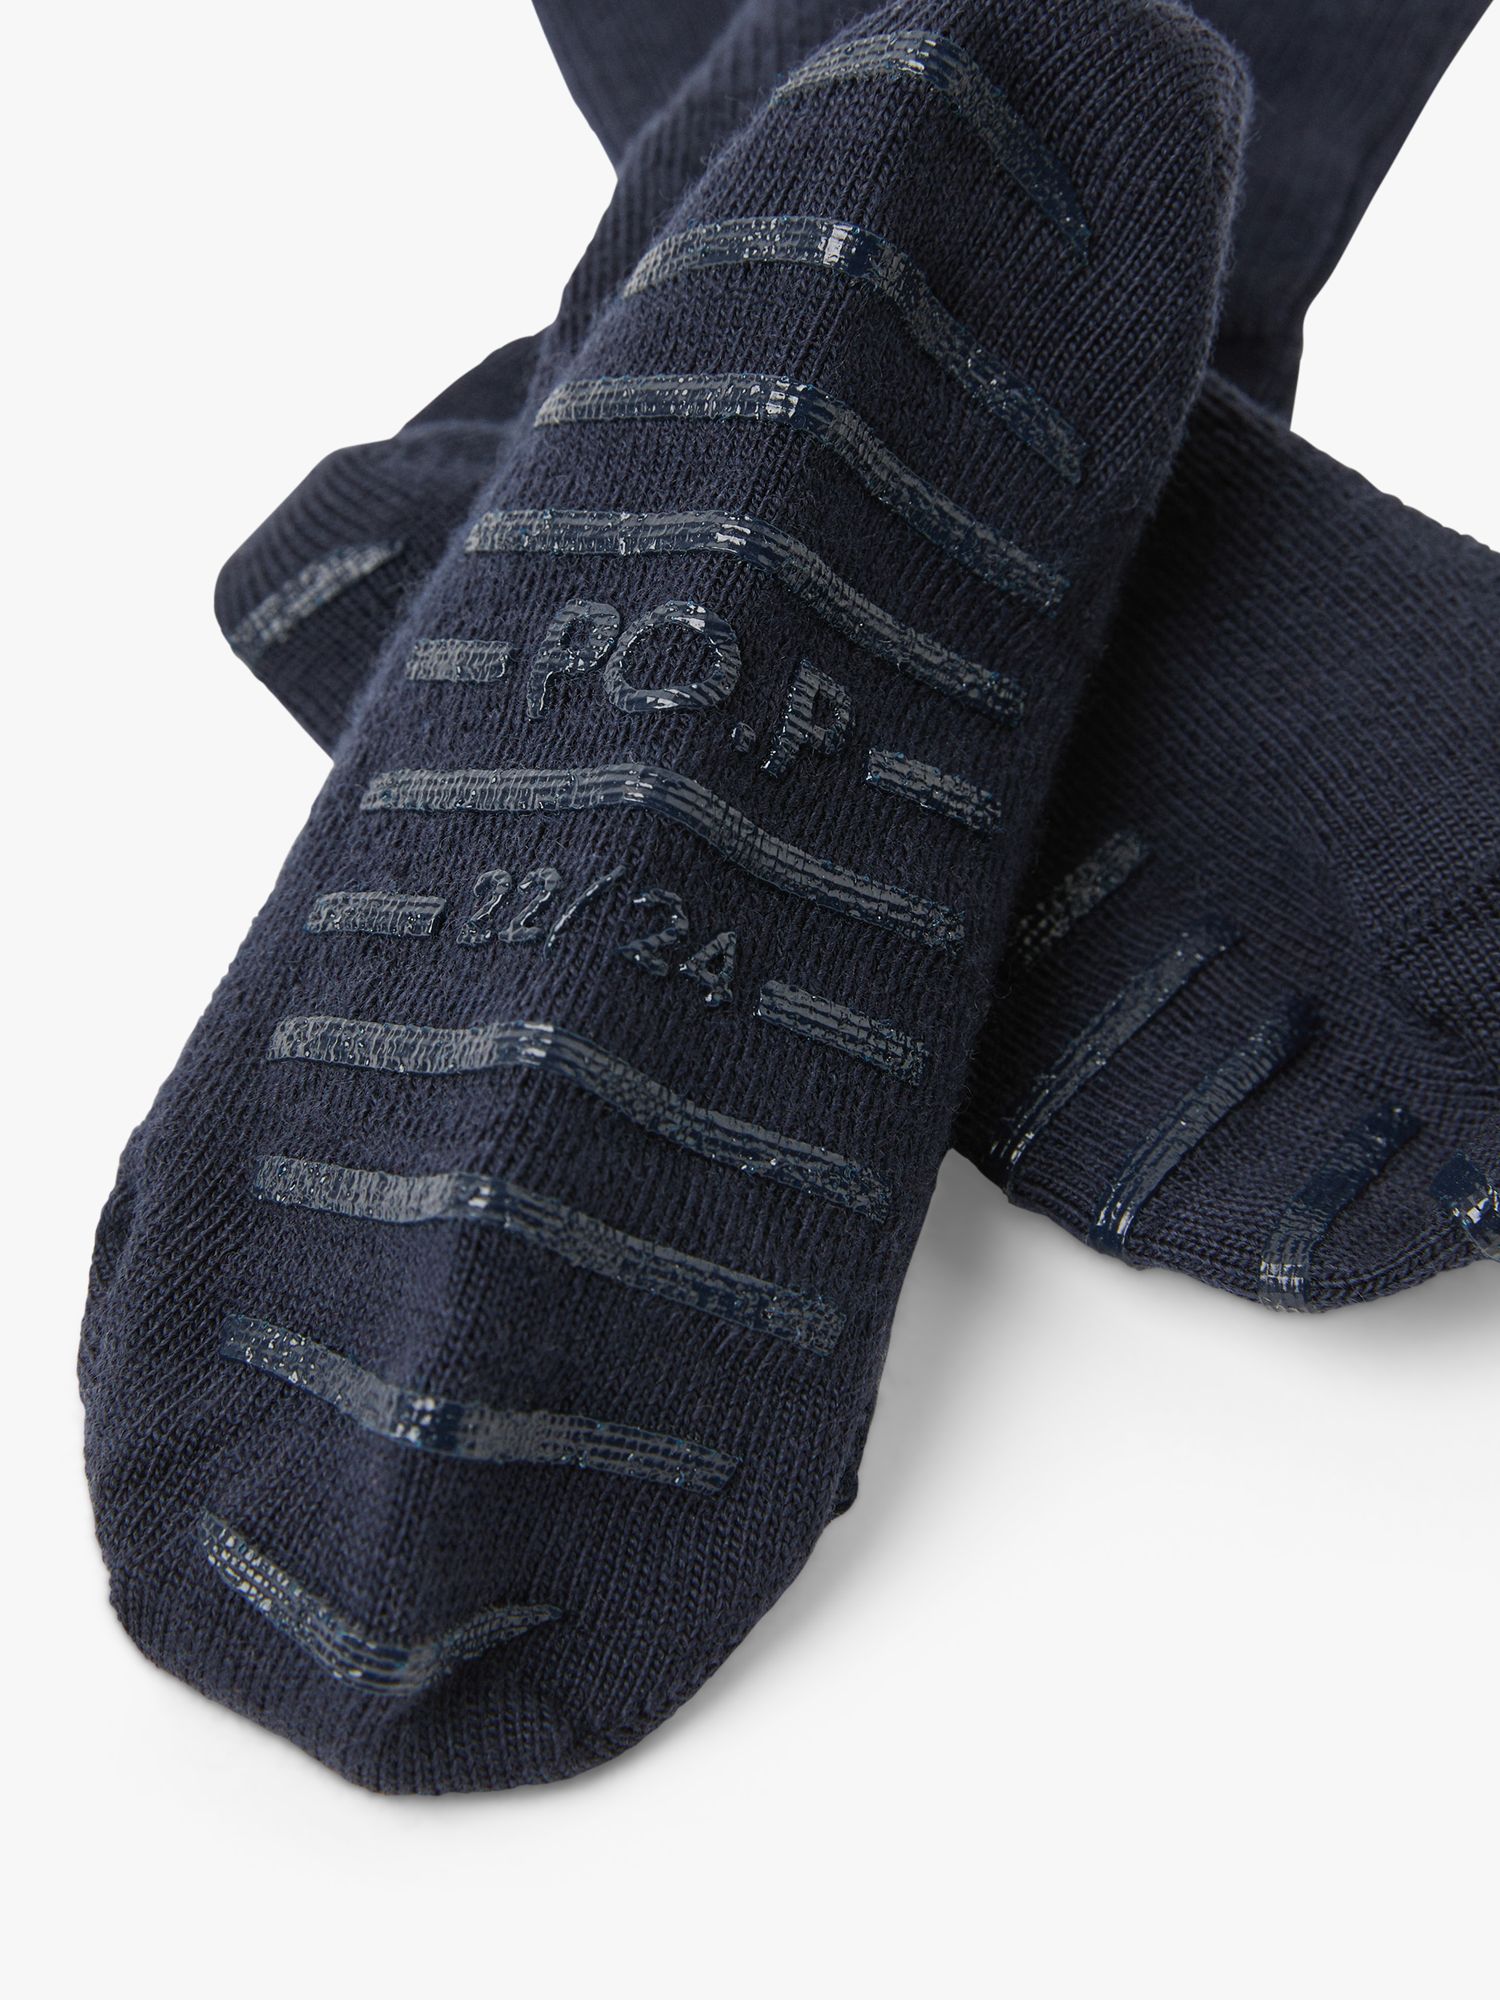 Buy Polarn O. Pyret Kids' Merino Wool Blend Roll Top Socks, Blue Online at johnlewis.com